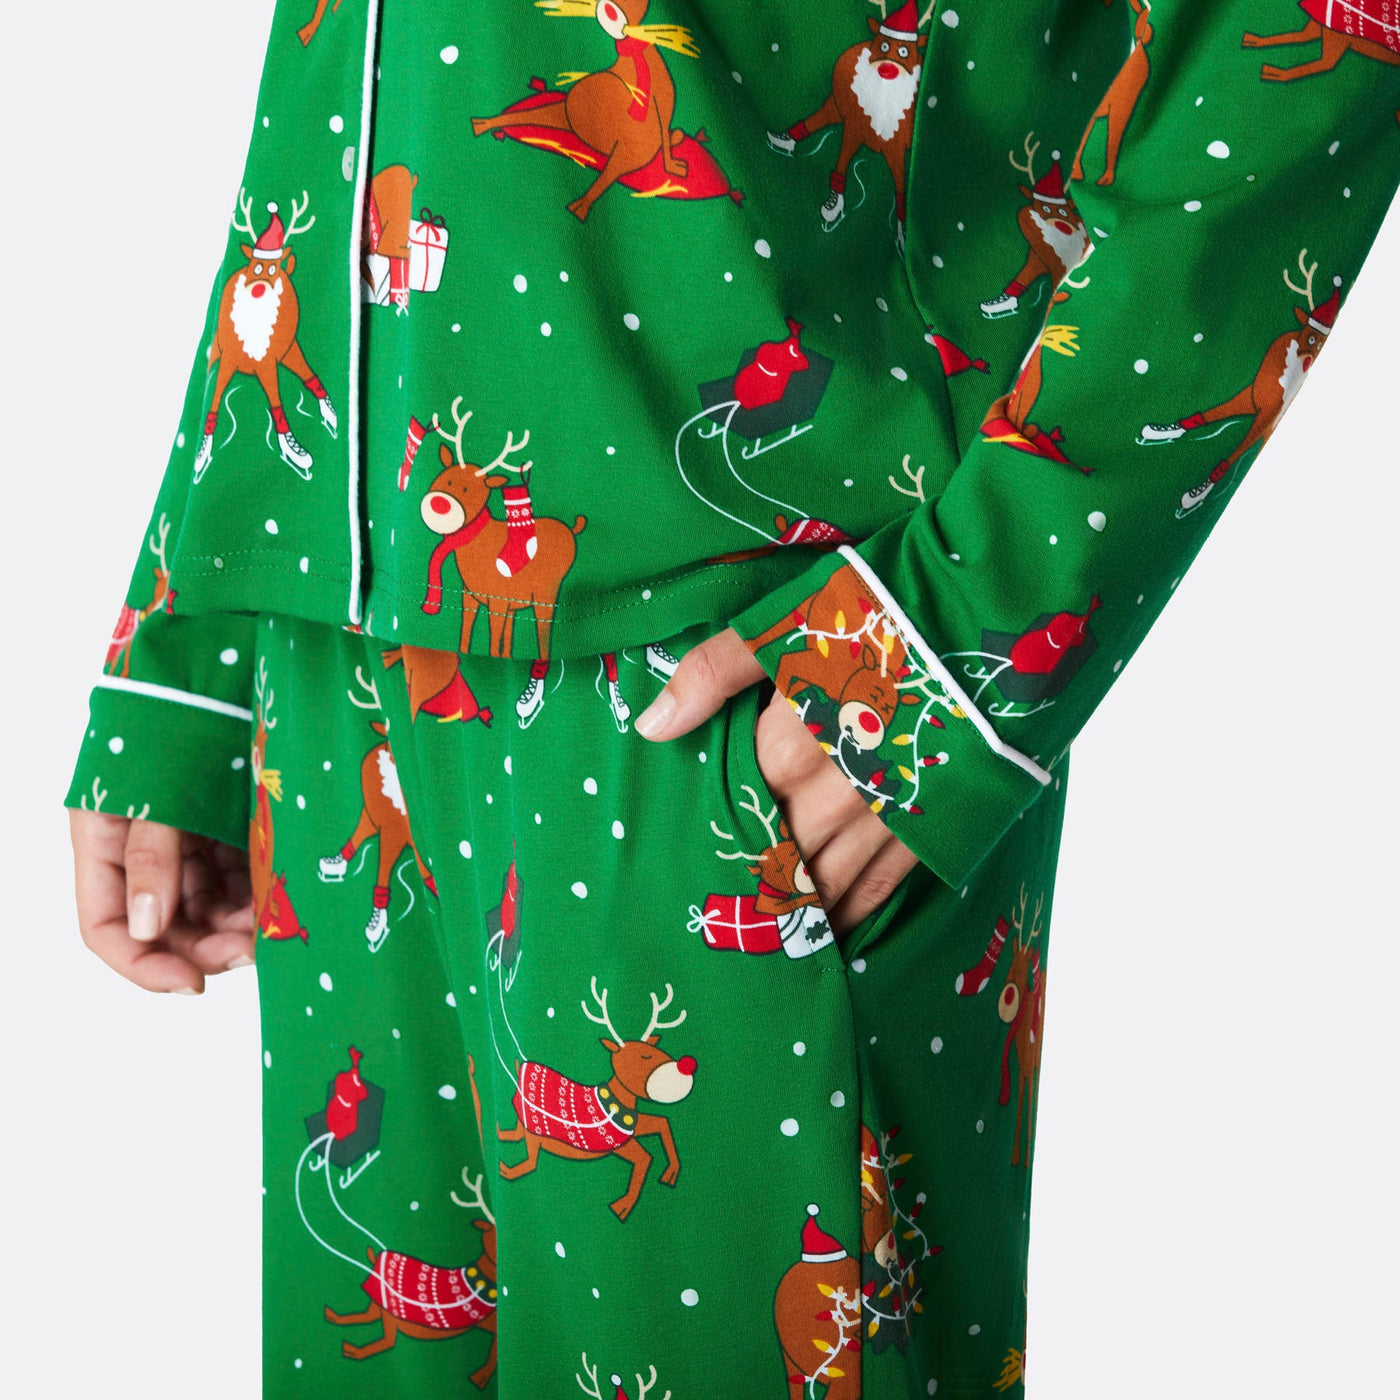 Women's Reindeer Collared Christmas Pyjamas